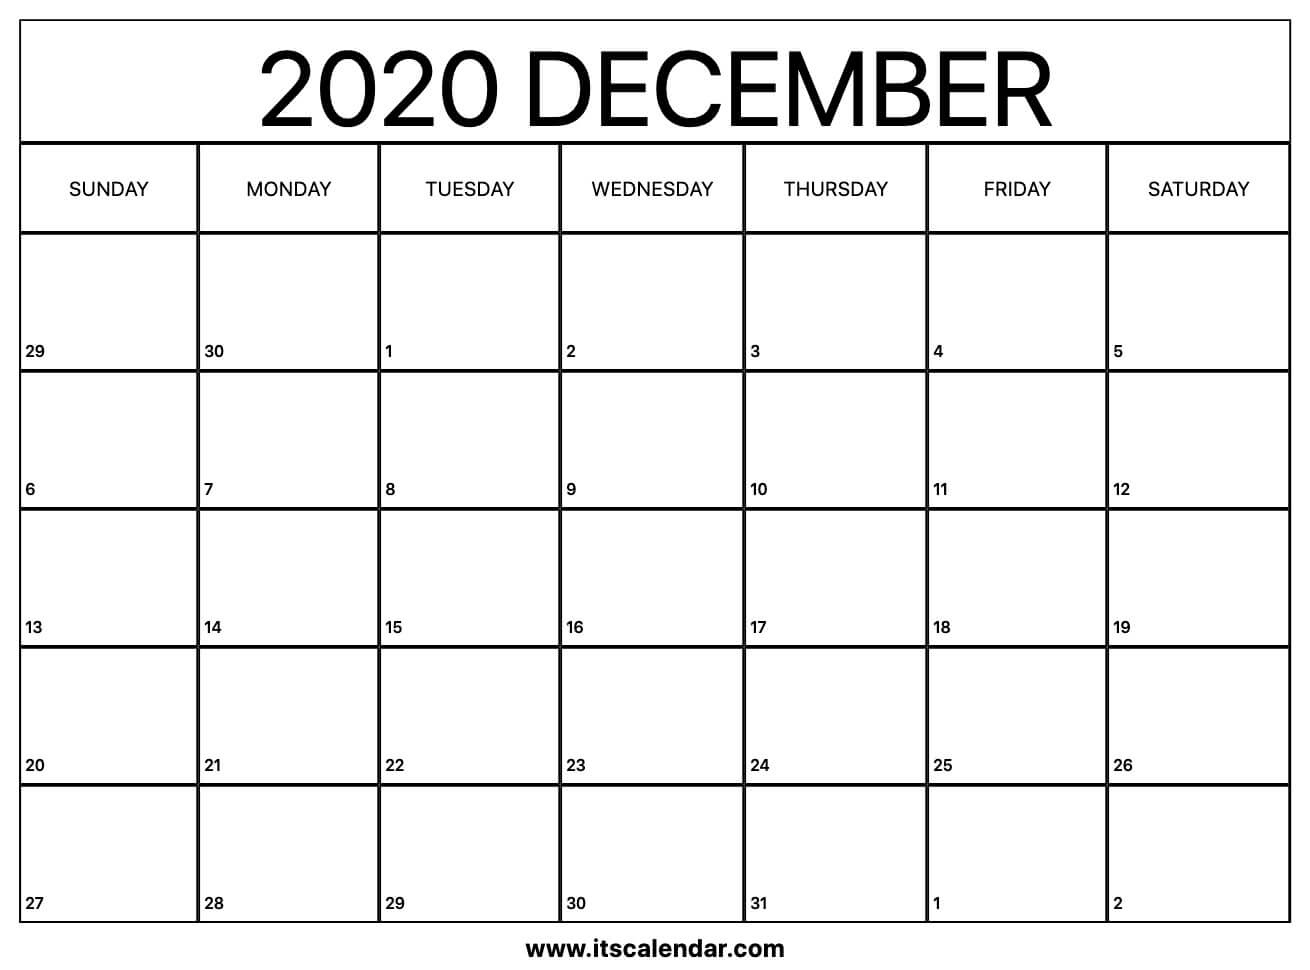 Free Printable December 2020 Calendar Calendar Showing December 2020 And January 2021